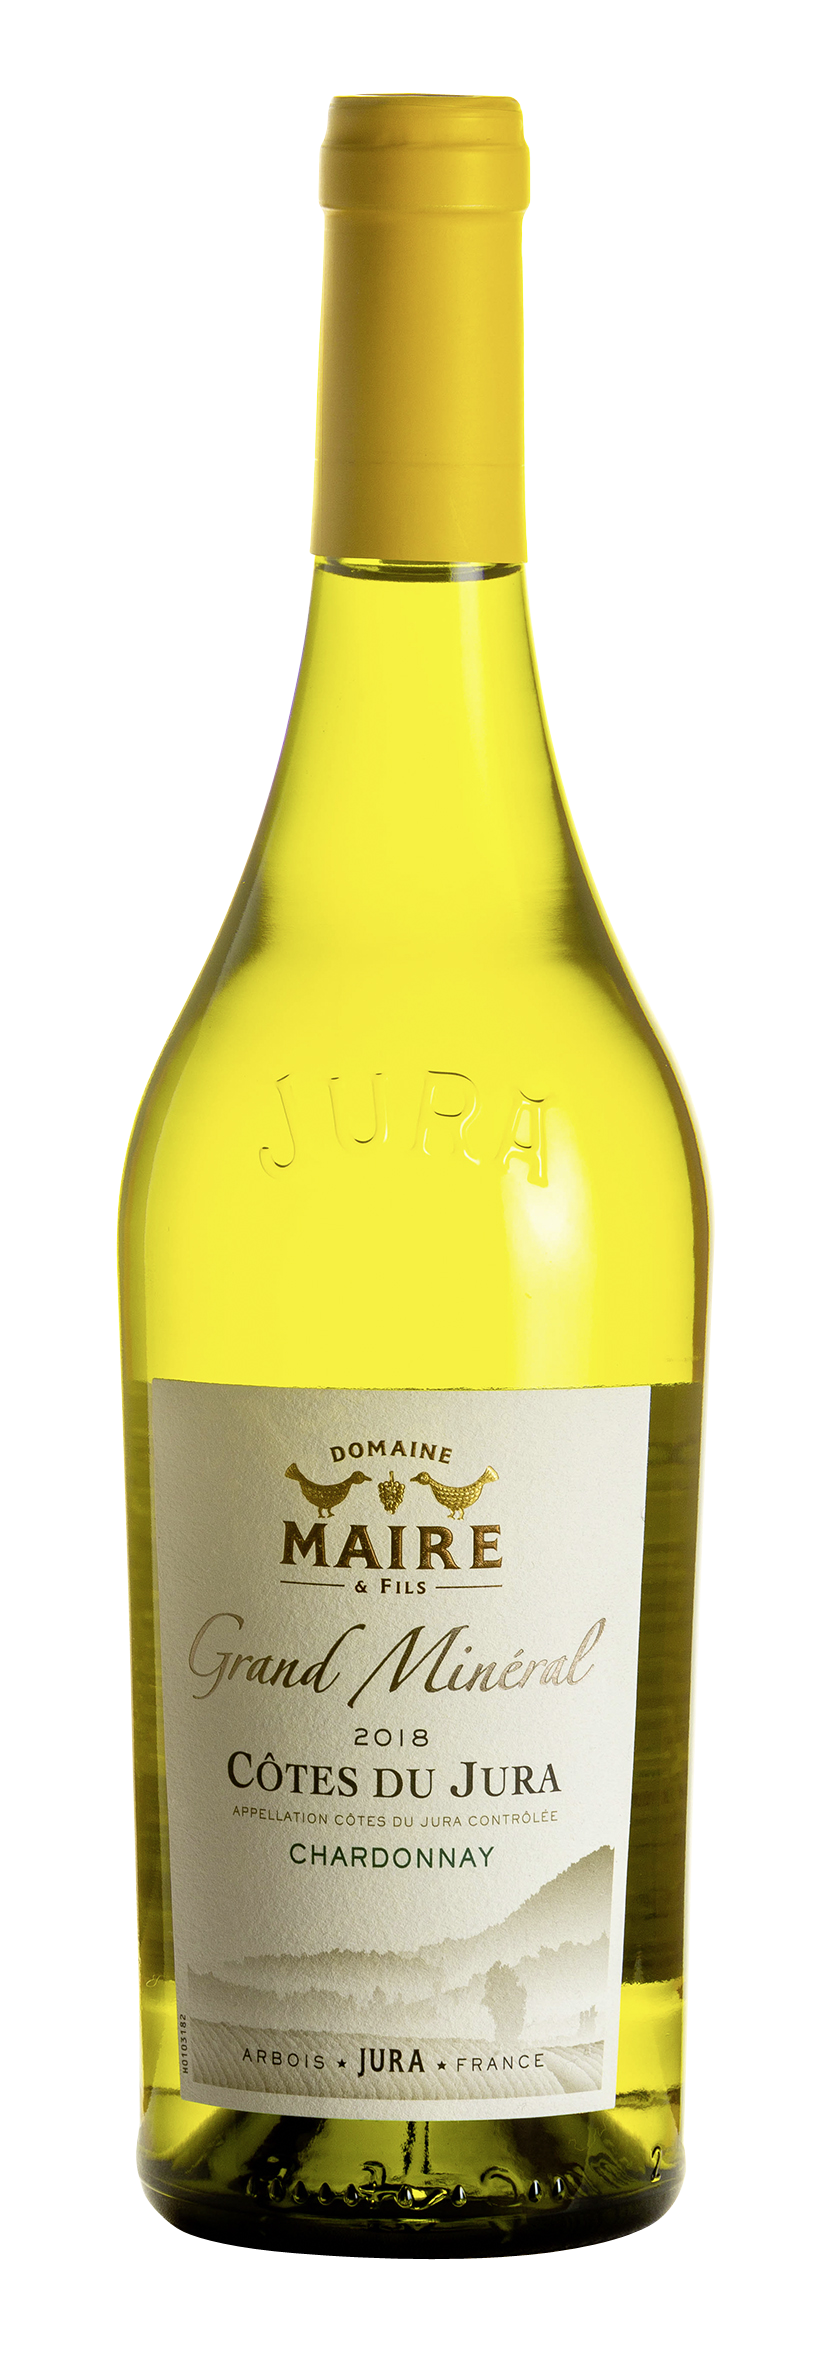 Côtes du Jura AOC Chardonnay Grand Minéral 2018